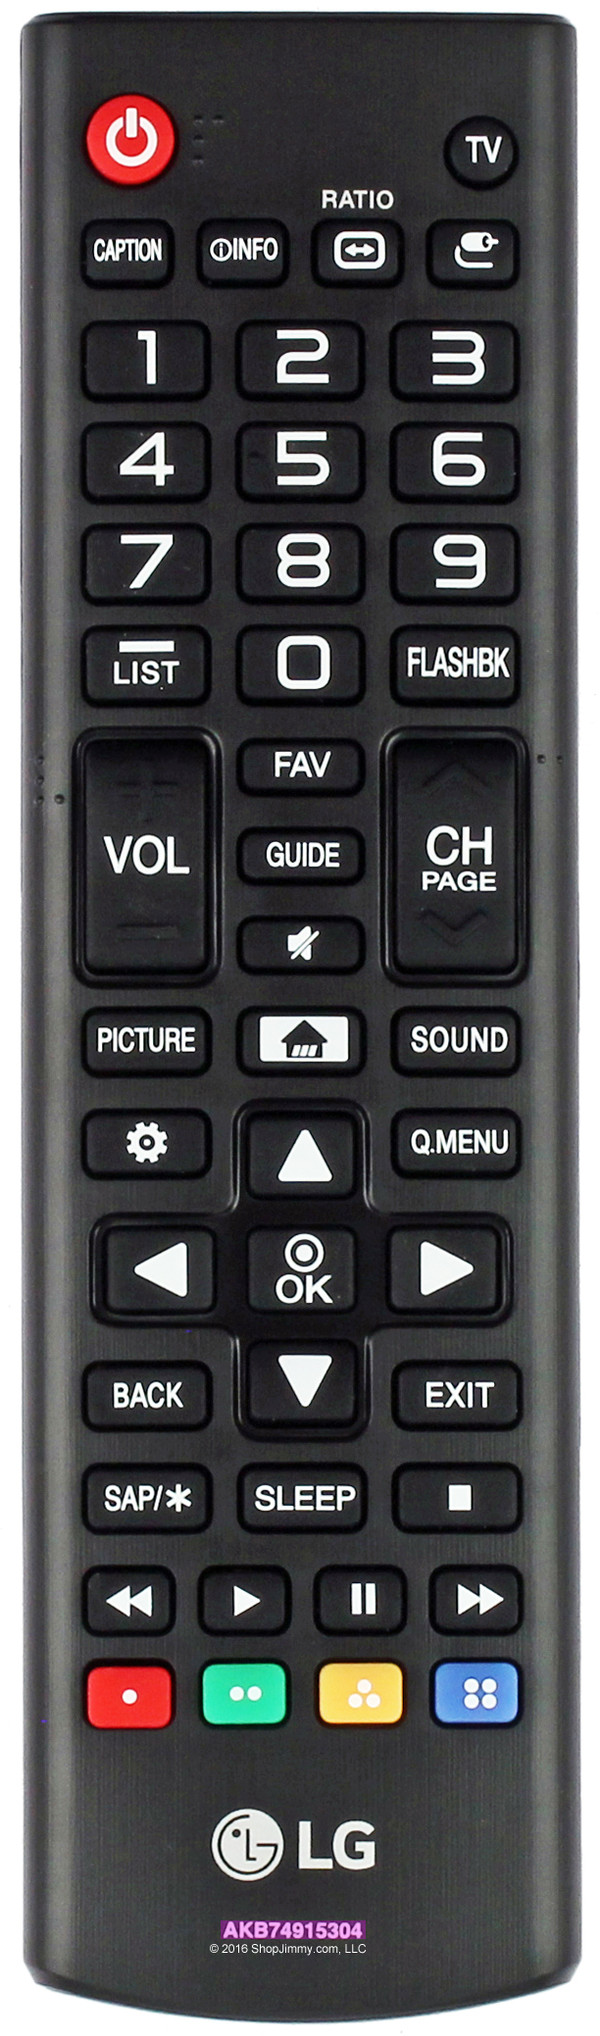 LG AKB74915304 Remote Control - New